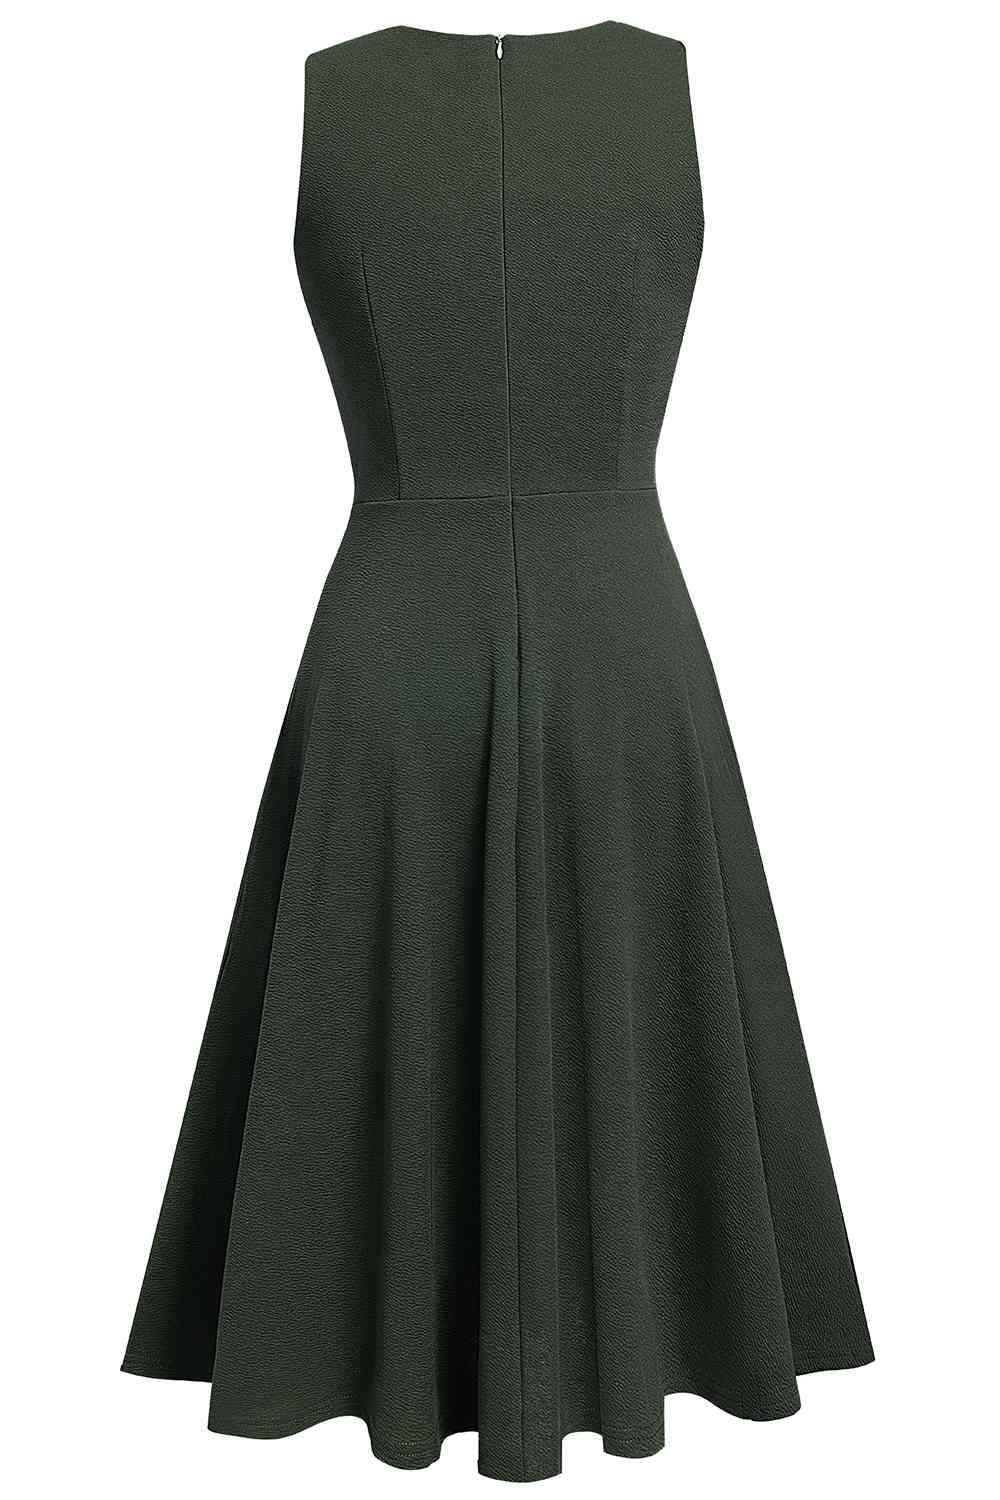 Round Neck Sleeveless Lace Trim Dress - All Dresses - Dresses - 9 - 2024